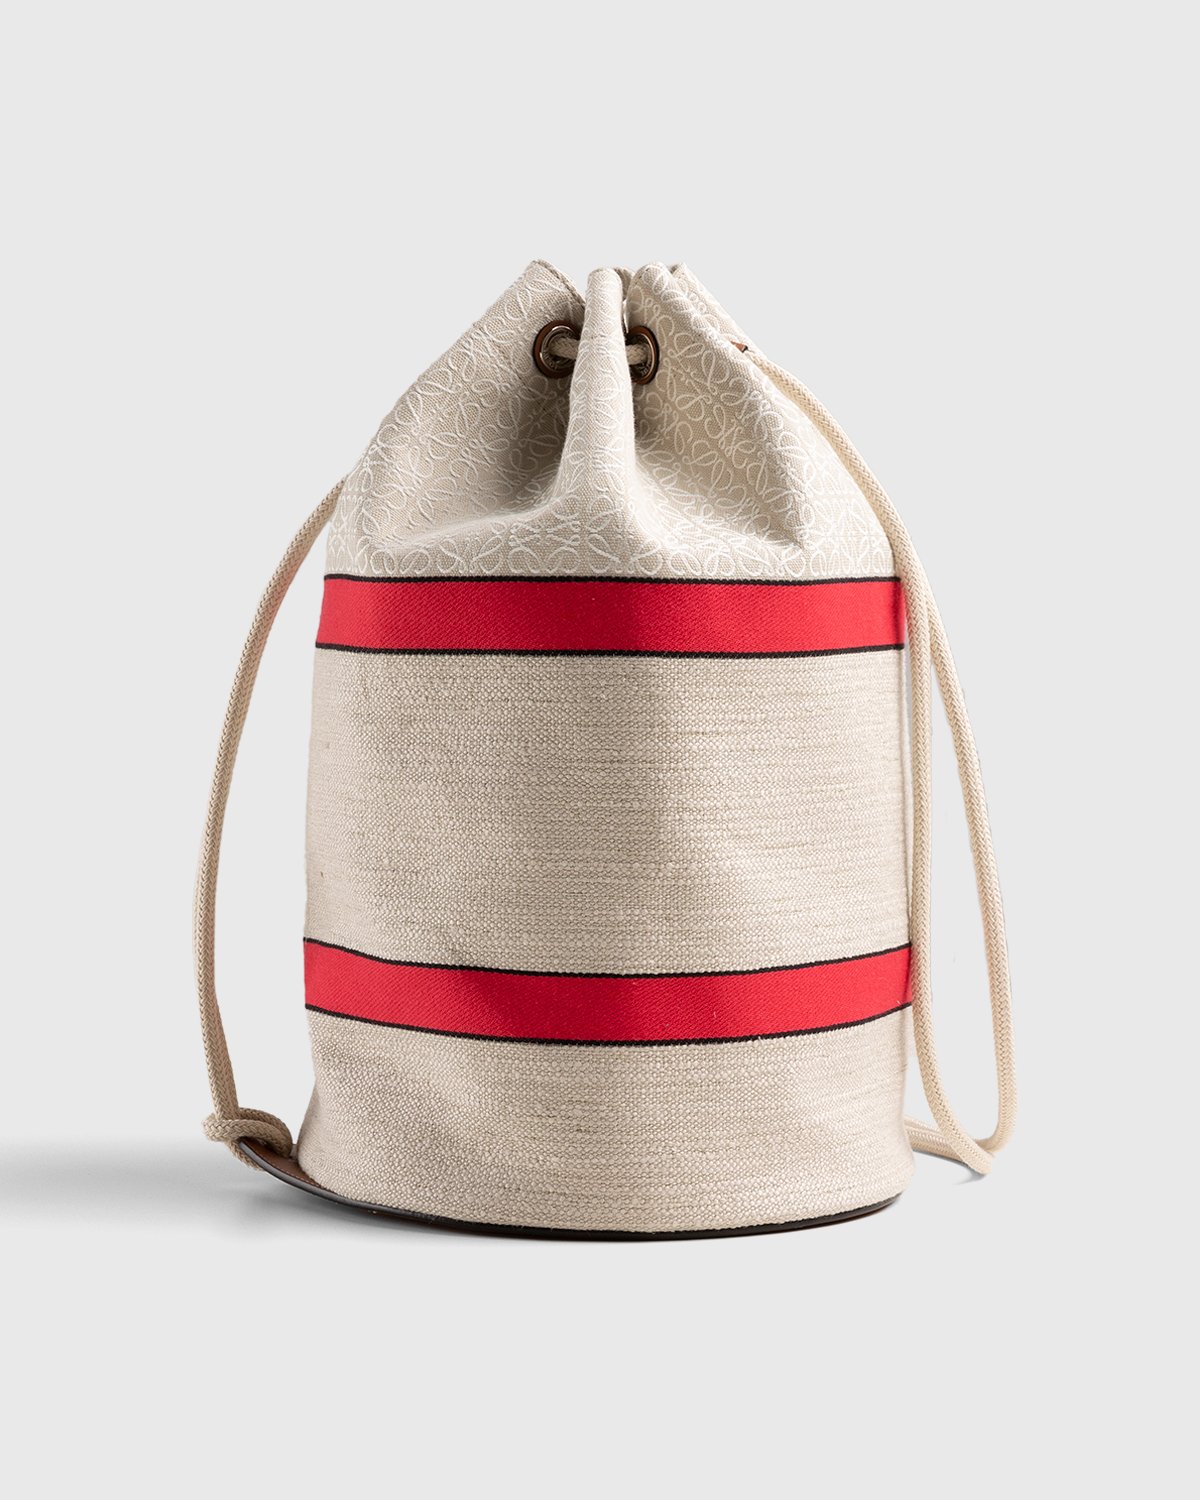 Loewe - Paula's Ibiza Sailor Bag Ecru/Red - Accessories - Red - Image 2